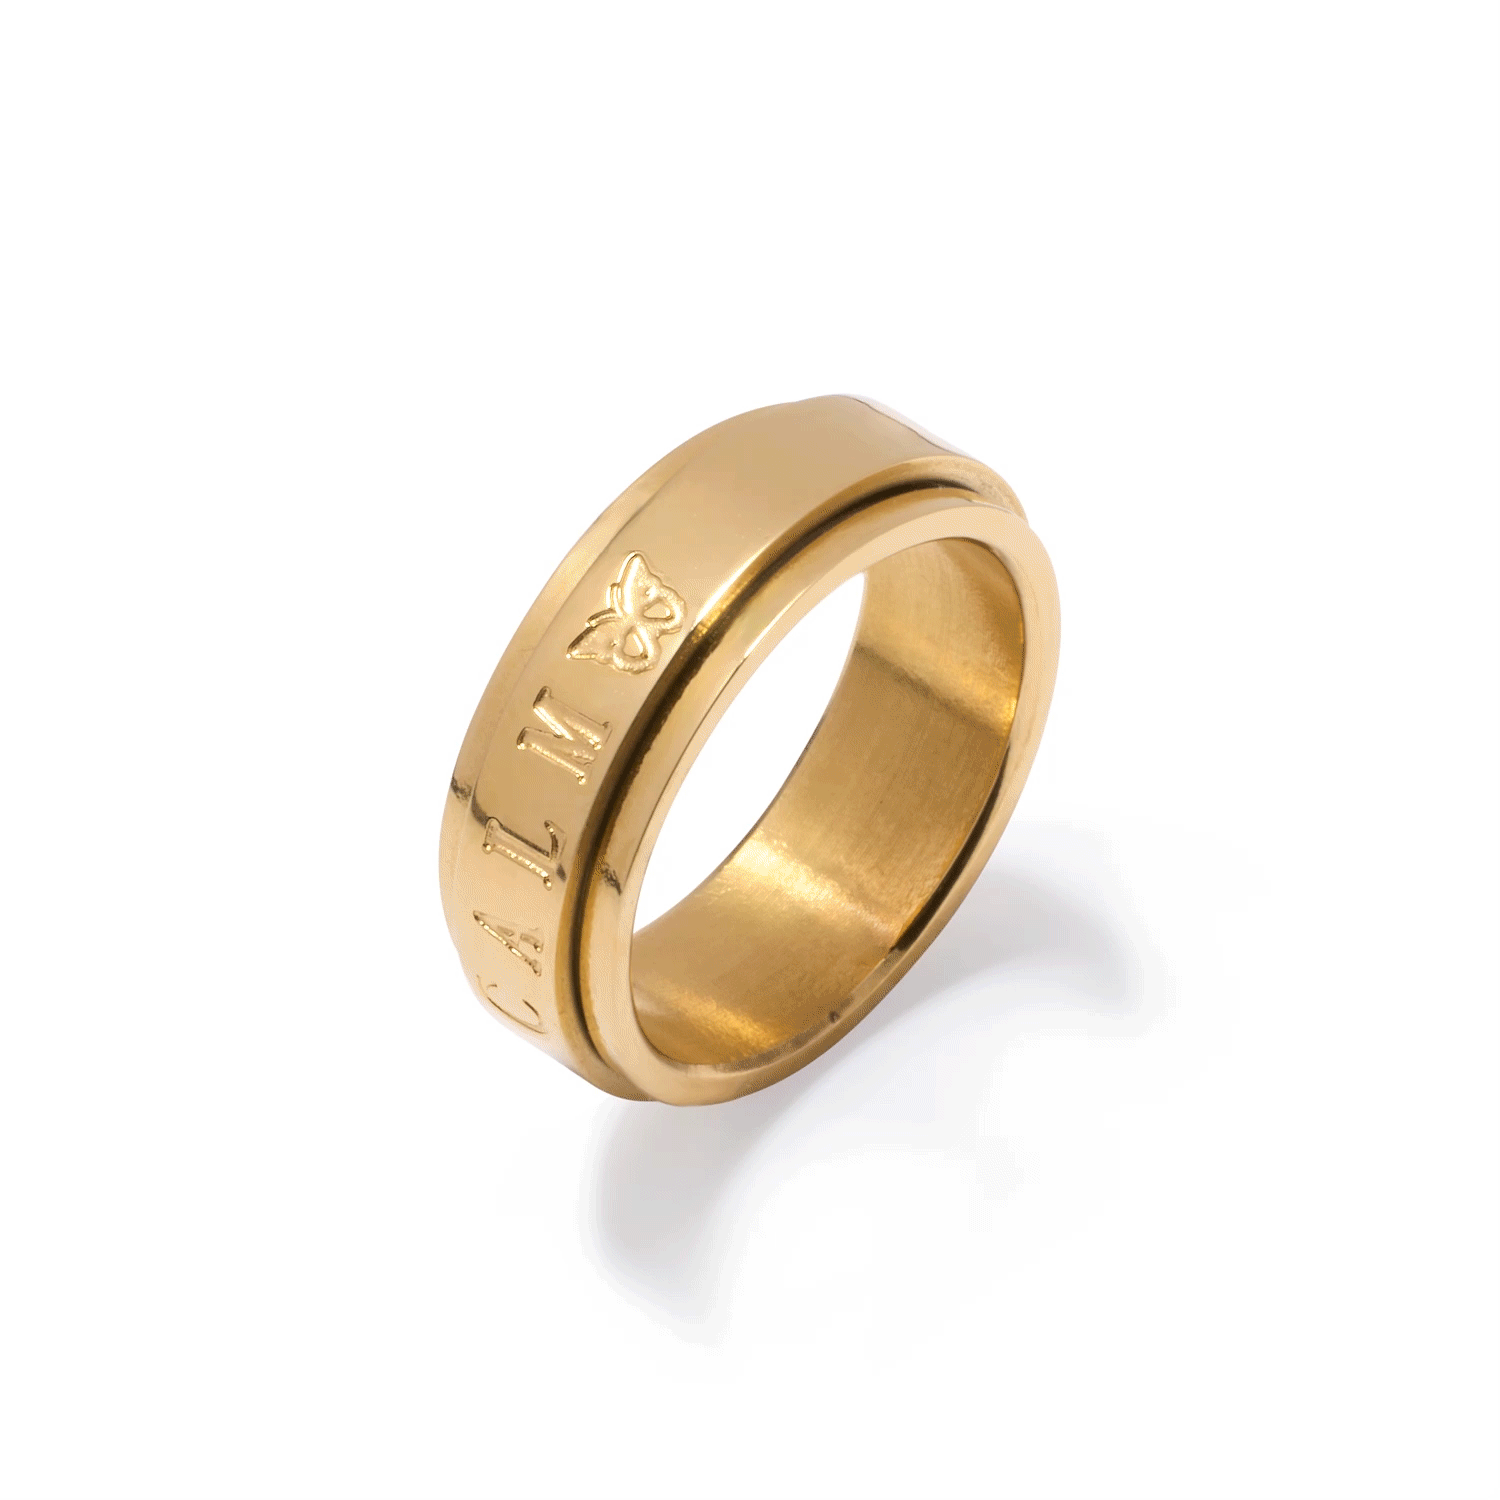 Custom Stamped Name Fidget Ring (Gold)